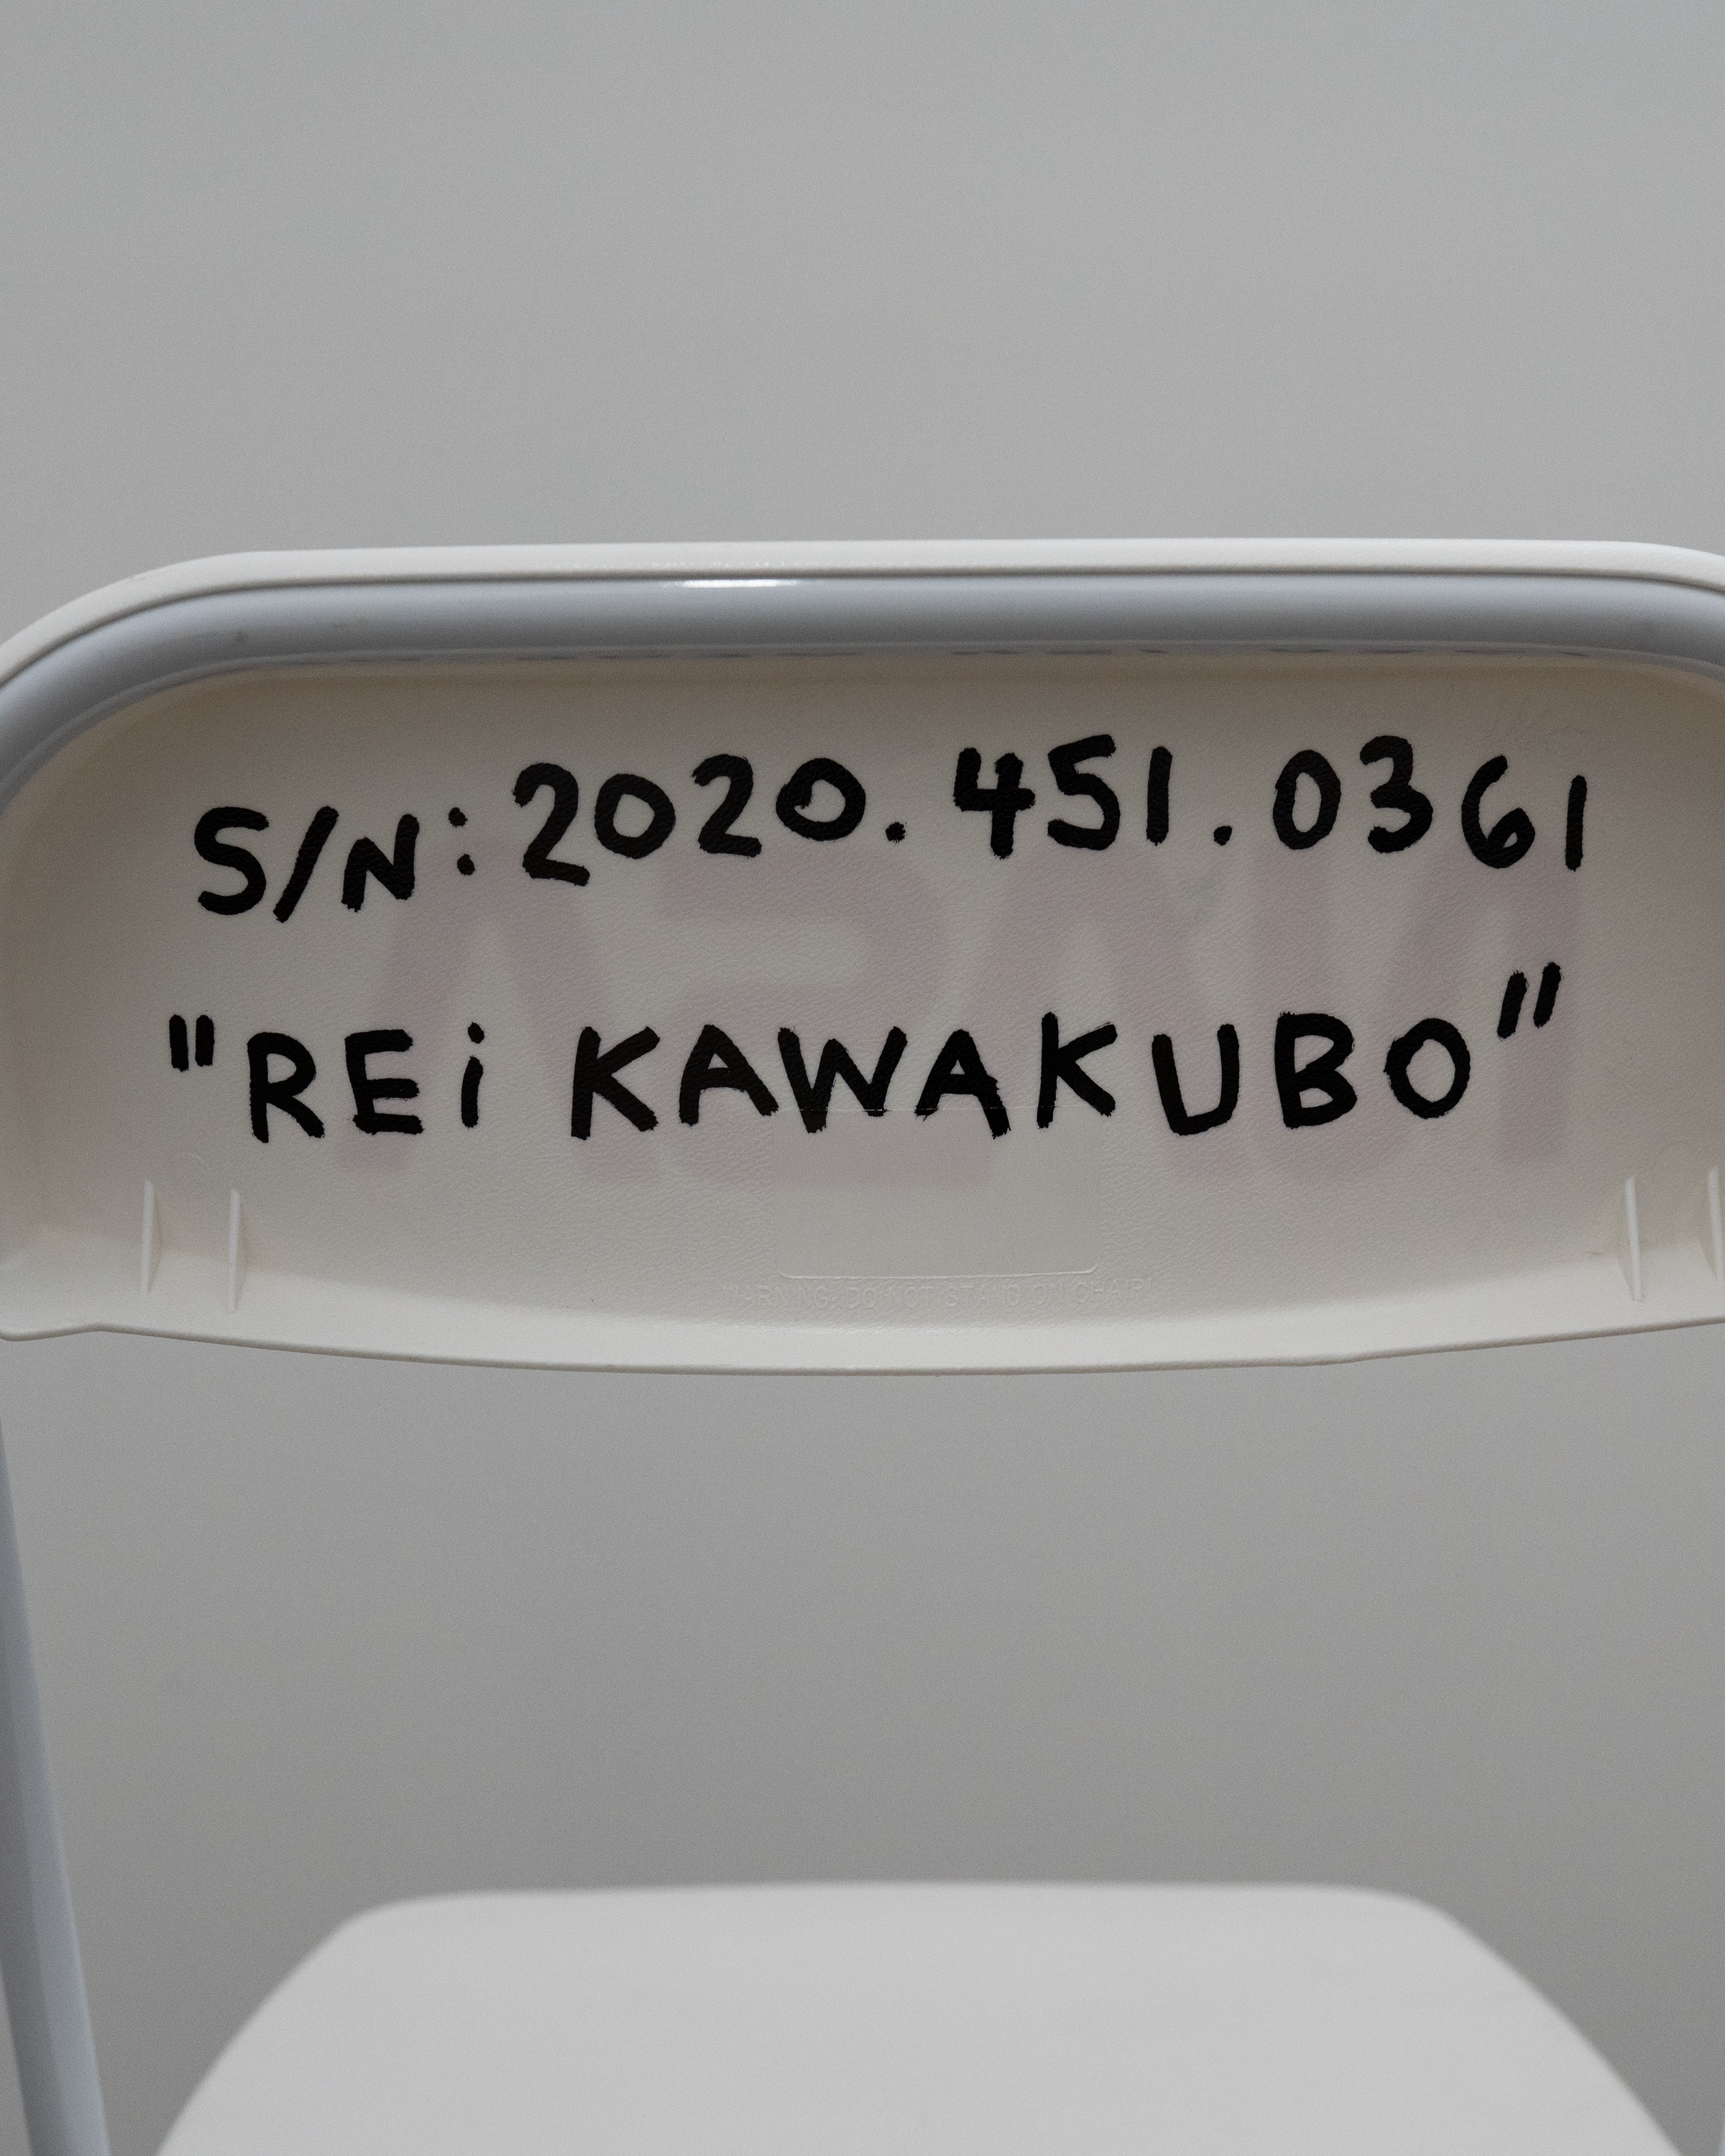 NASA Chair "Rei Kawakubo"